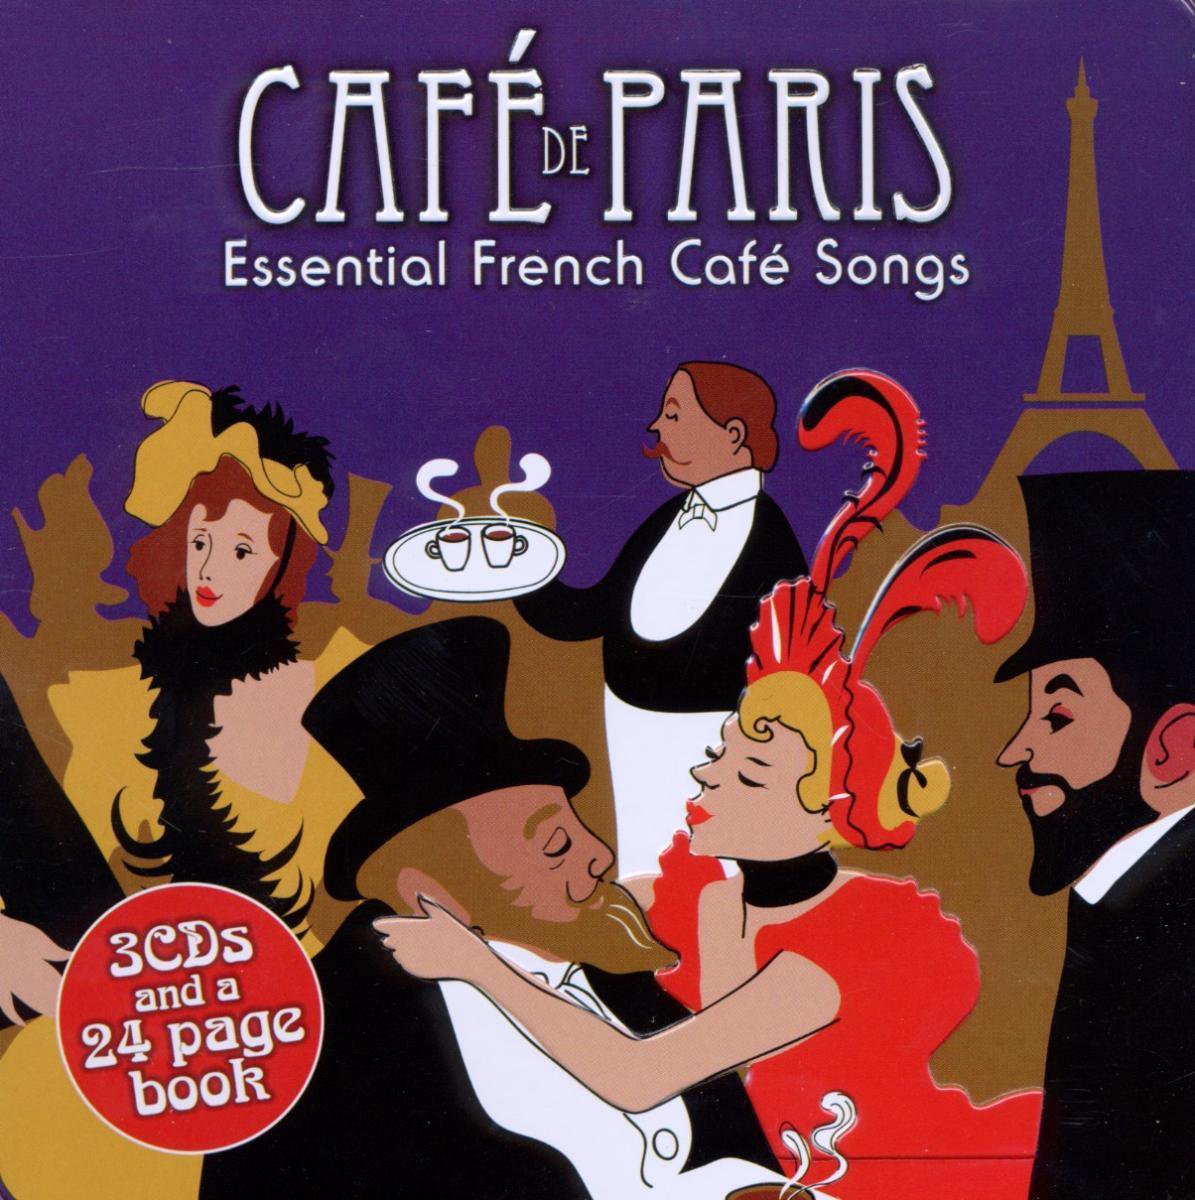 french café music album songs